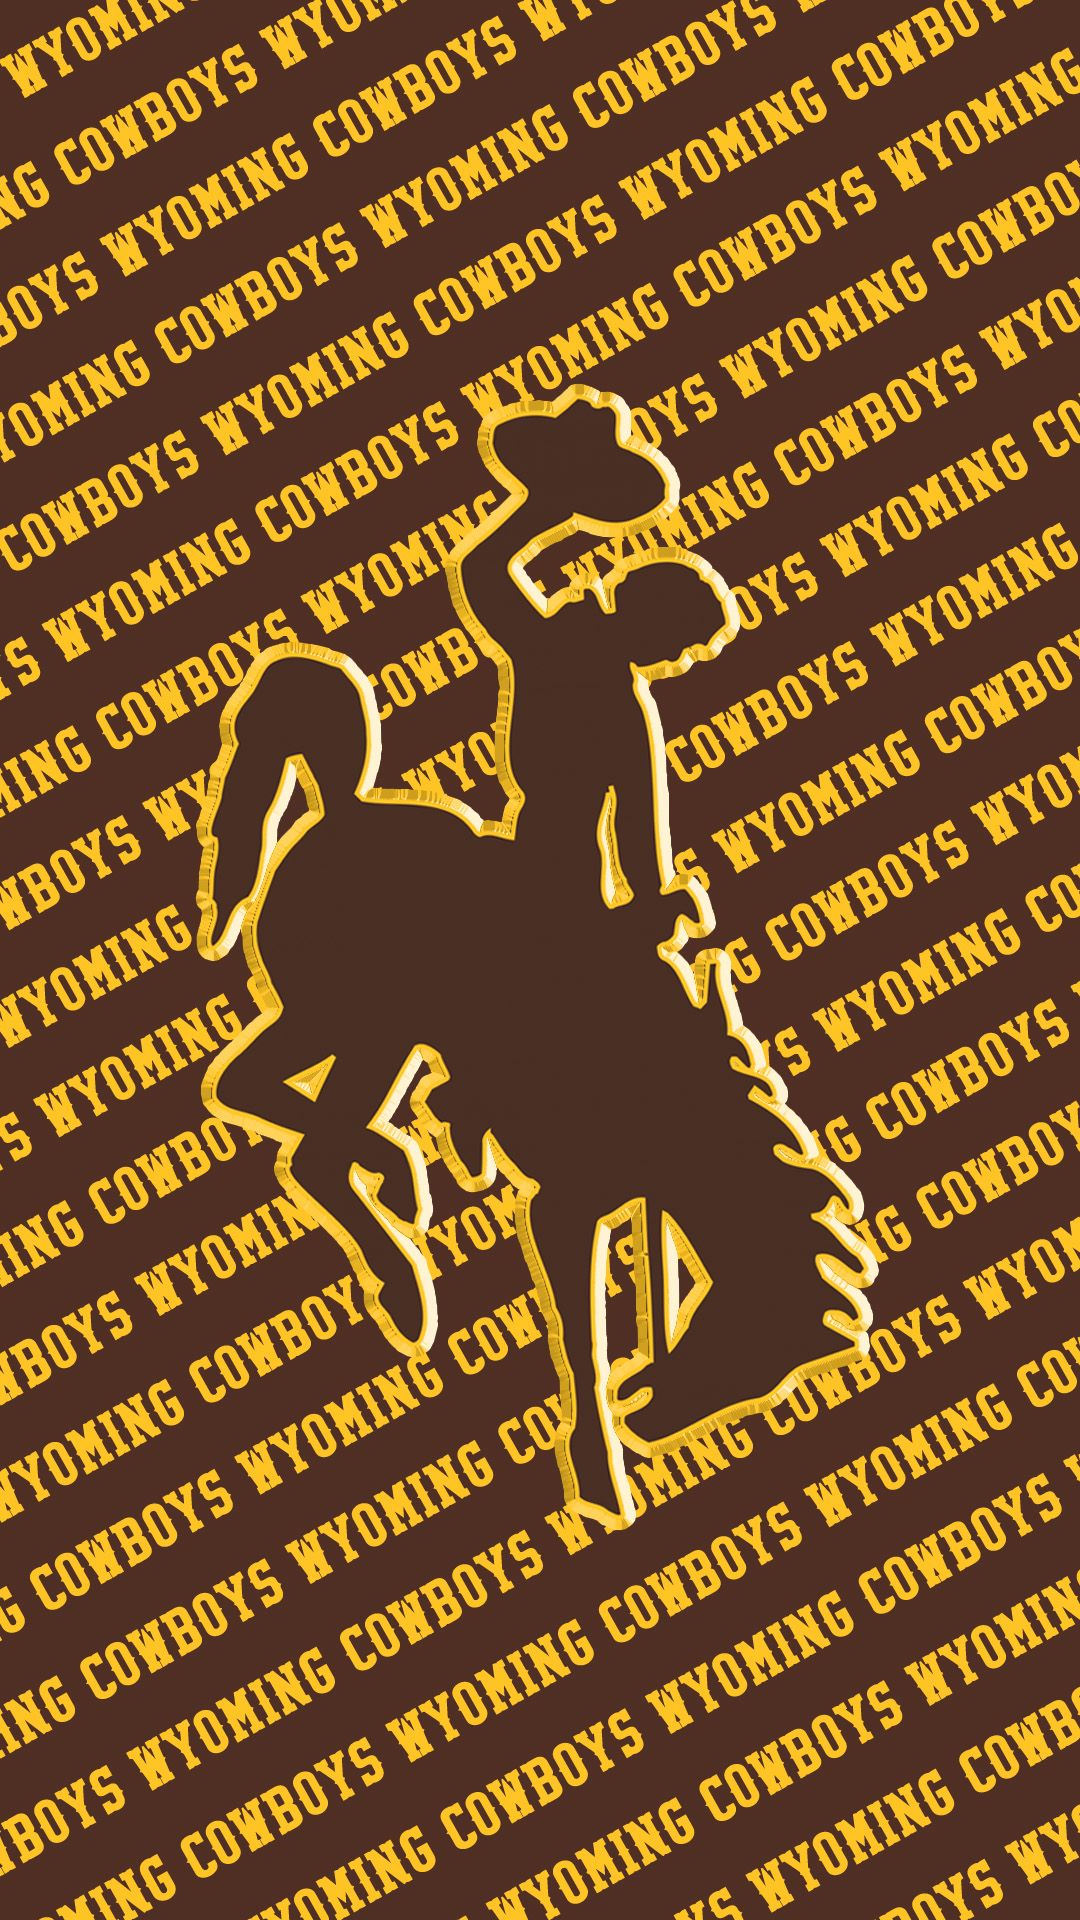 GoWyo. Wyoming cowboys, Wyoming, Cover photo